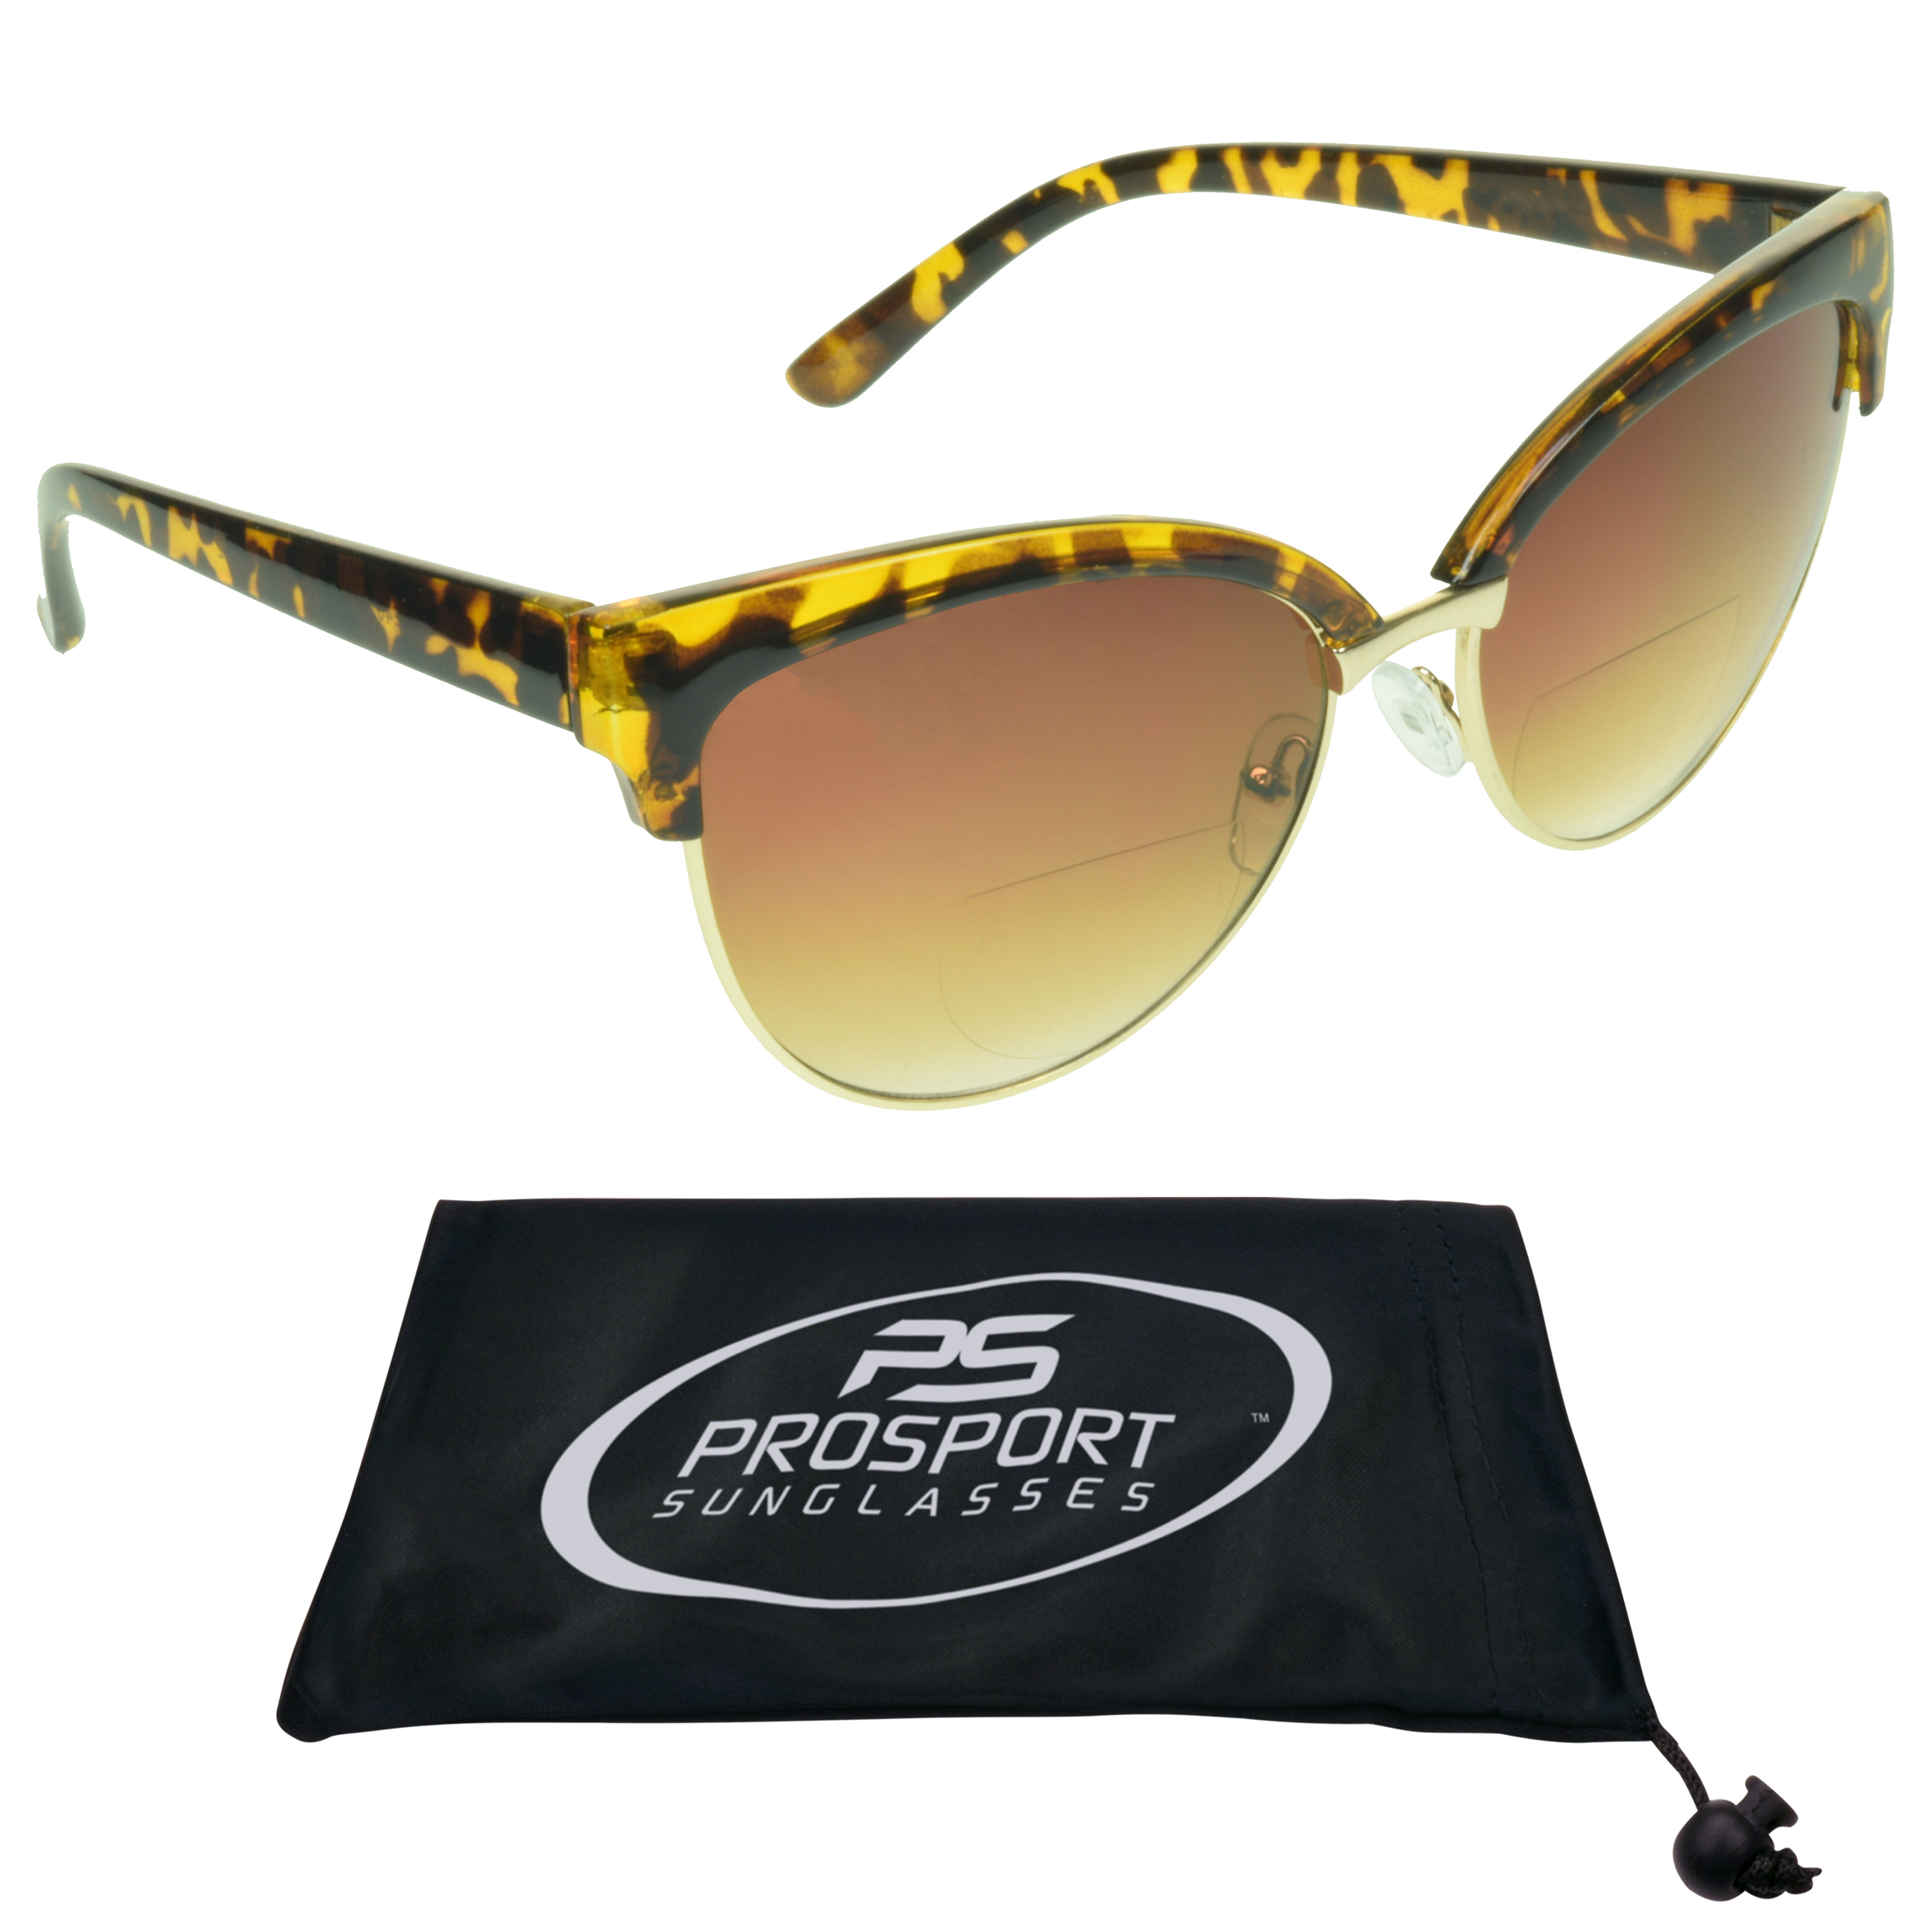 proSPORT Women Bifocal Reading Cateye Fashion Horn Rim Sunglasses Tortoise Gold Frame Brown Lens +2.50 - image 1 of 5